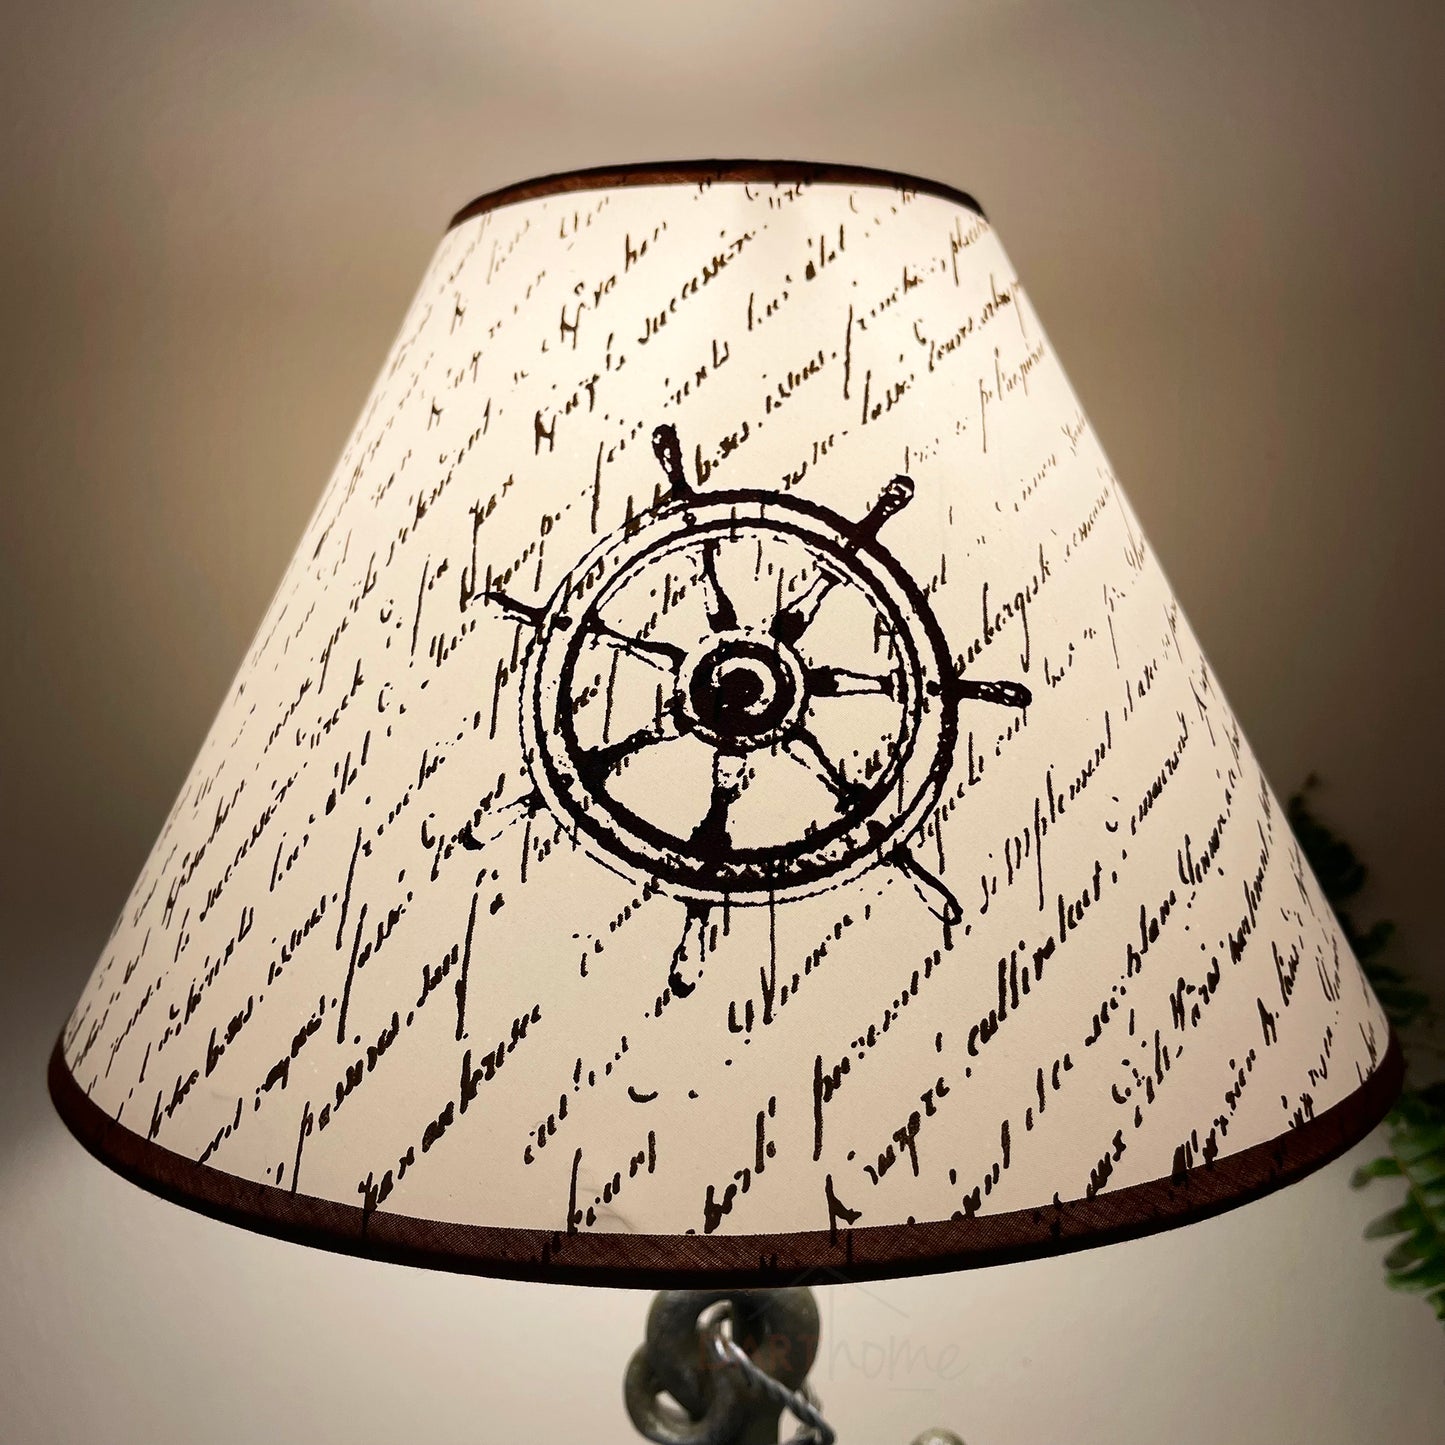 Anchor Table Lamp